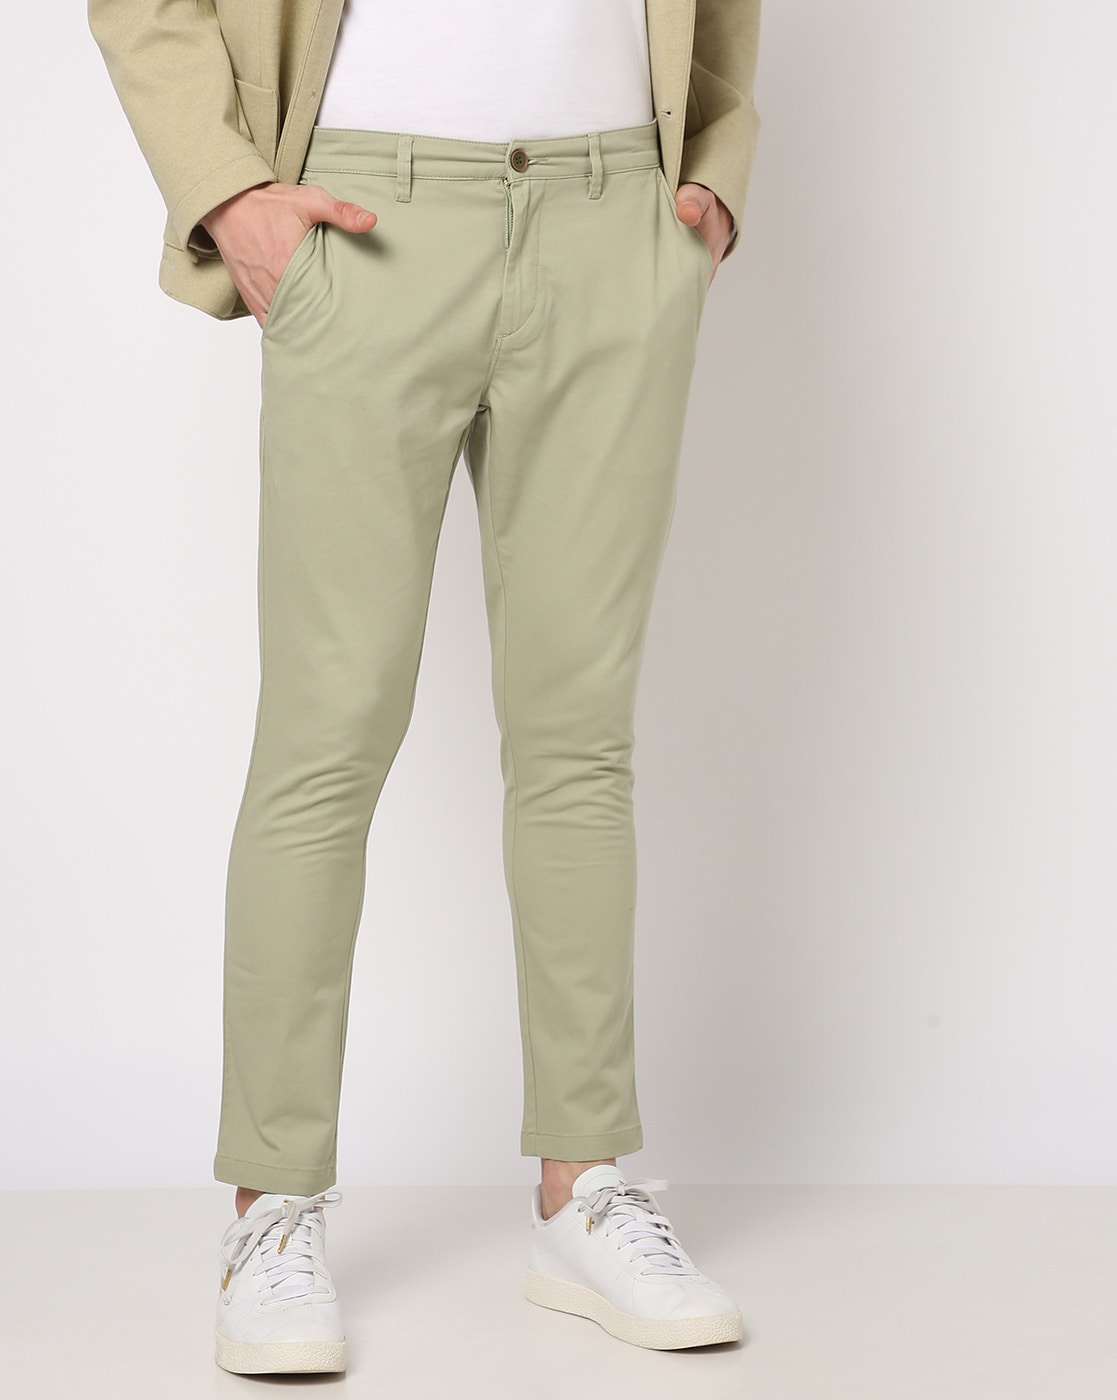 Men Trousers Slim Fit Ankle Suit Pants Drape Groom Casual Formal Office  Business | eBay